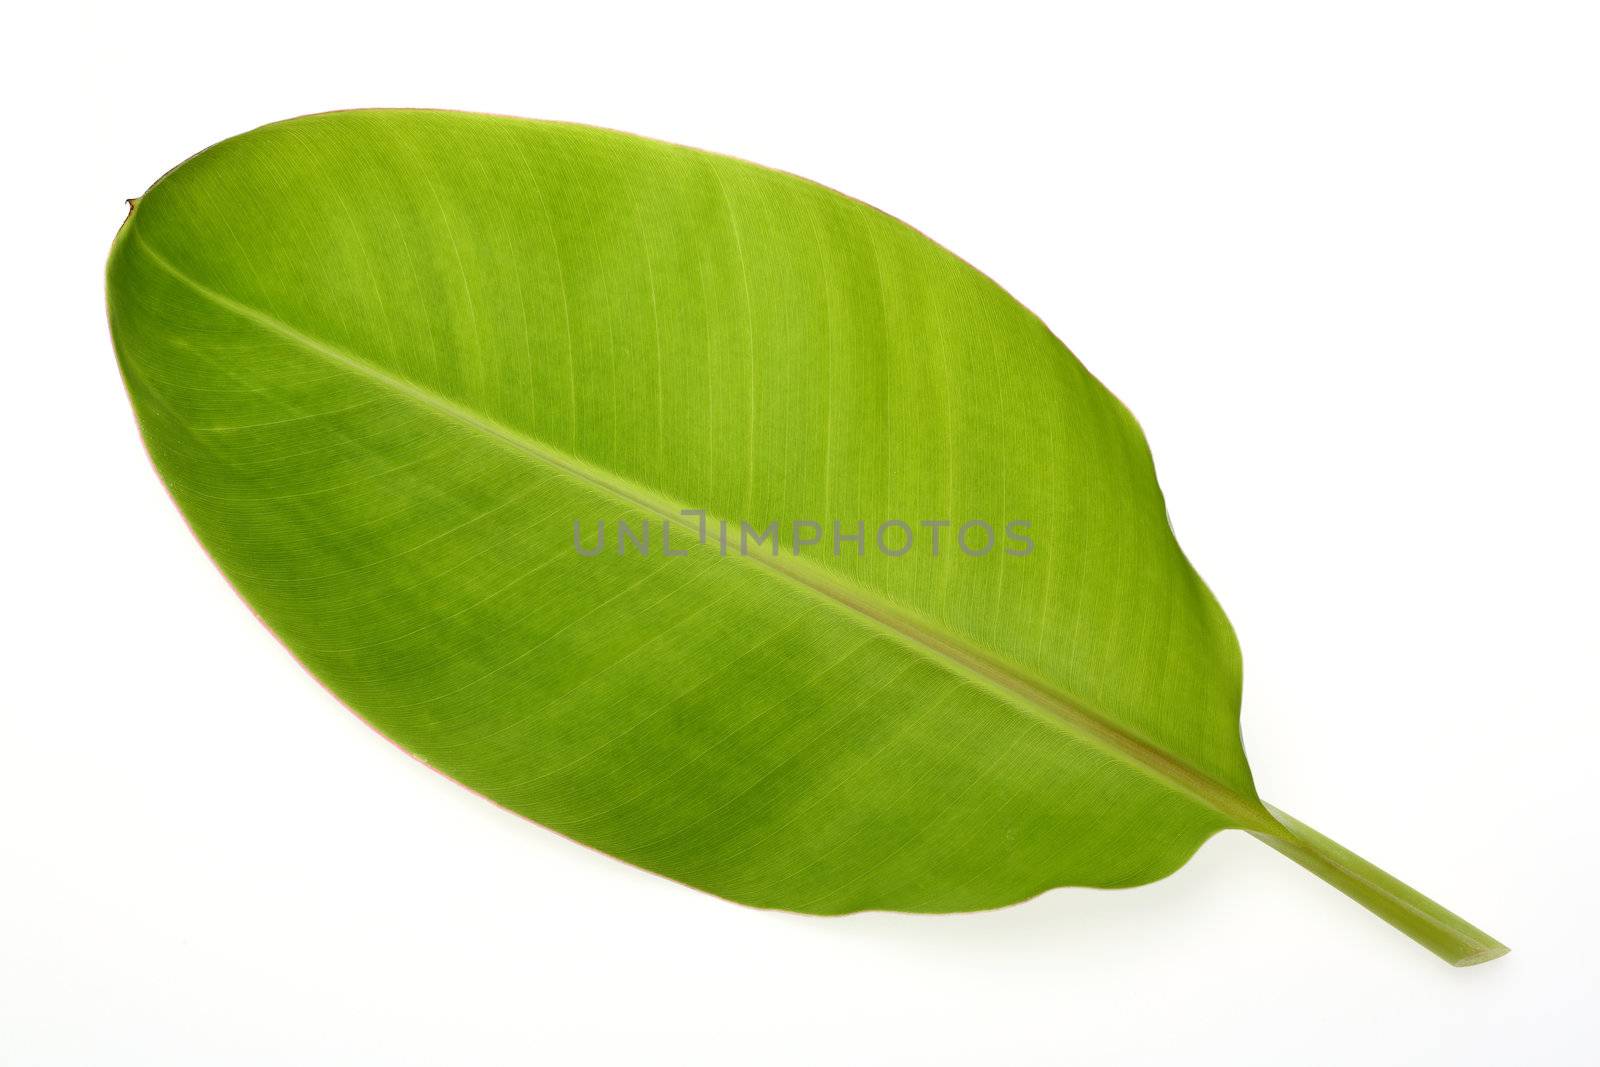 Banana leaf by smuay